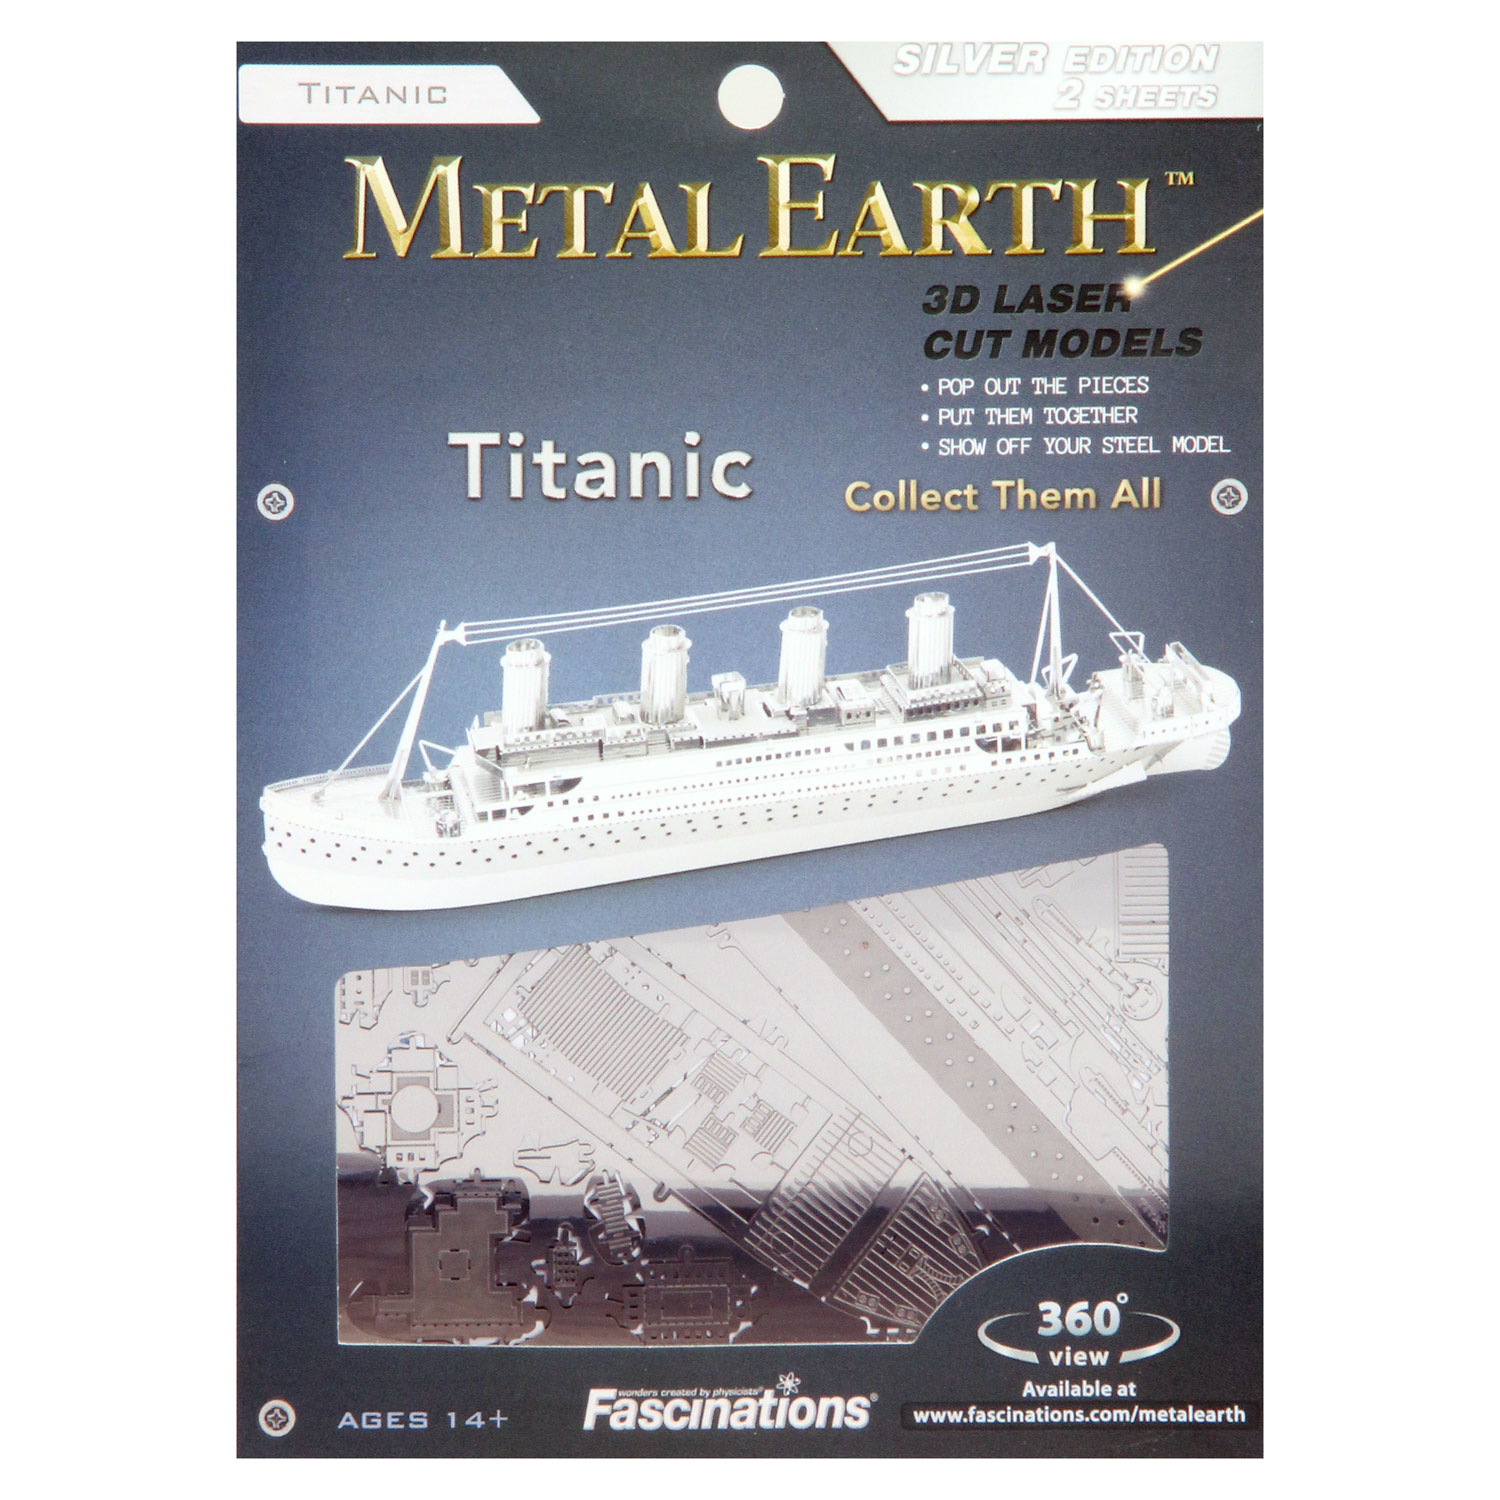 Metal Earth Titanic Ship Édition Argent